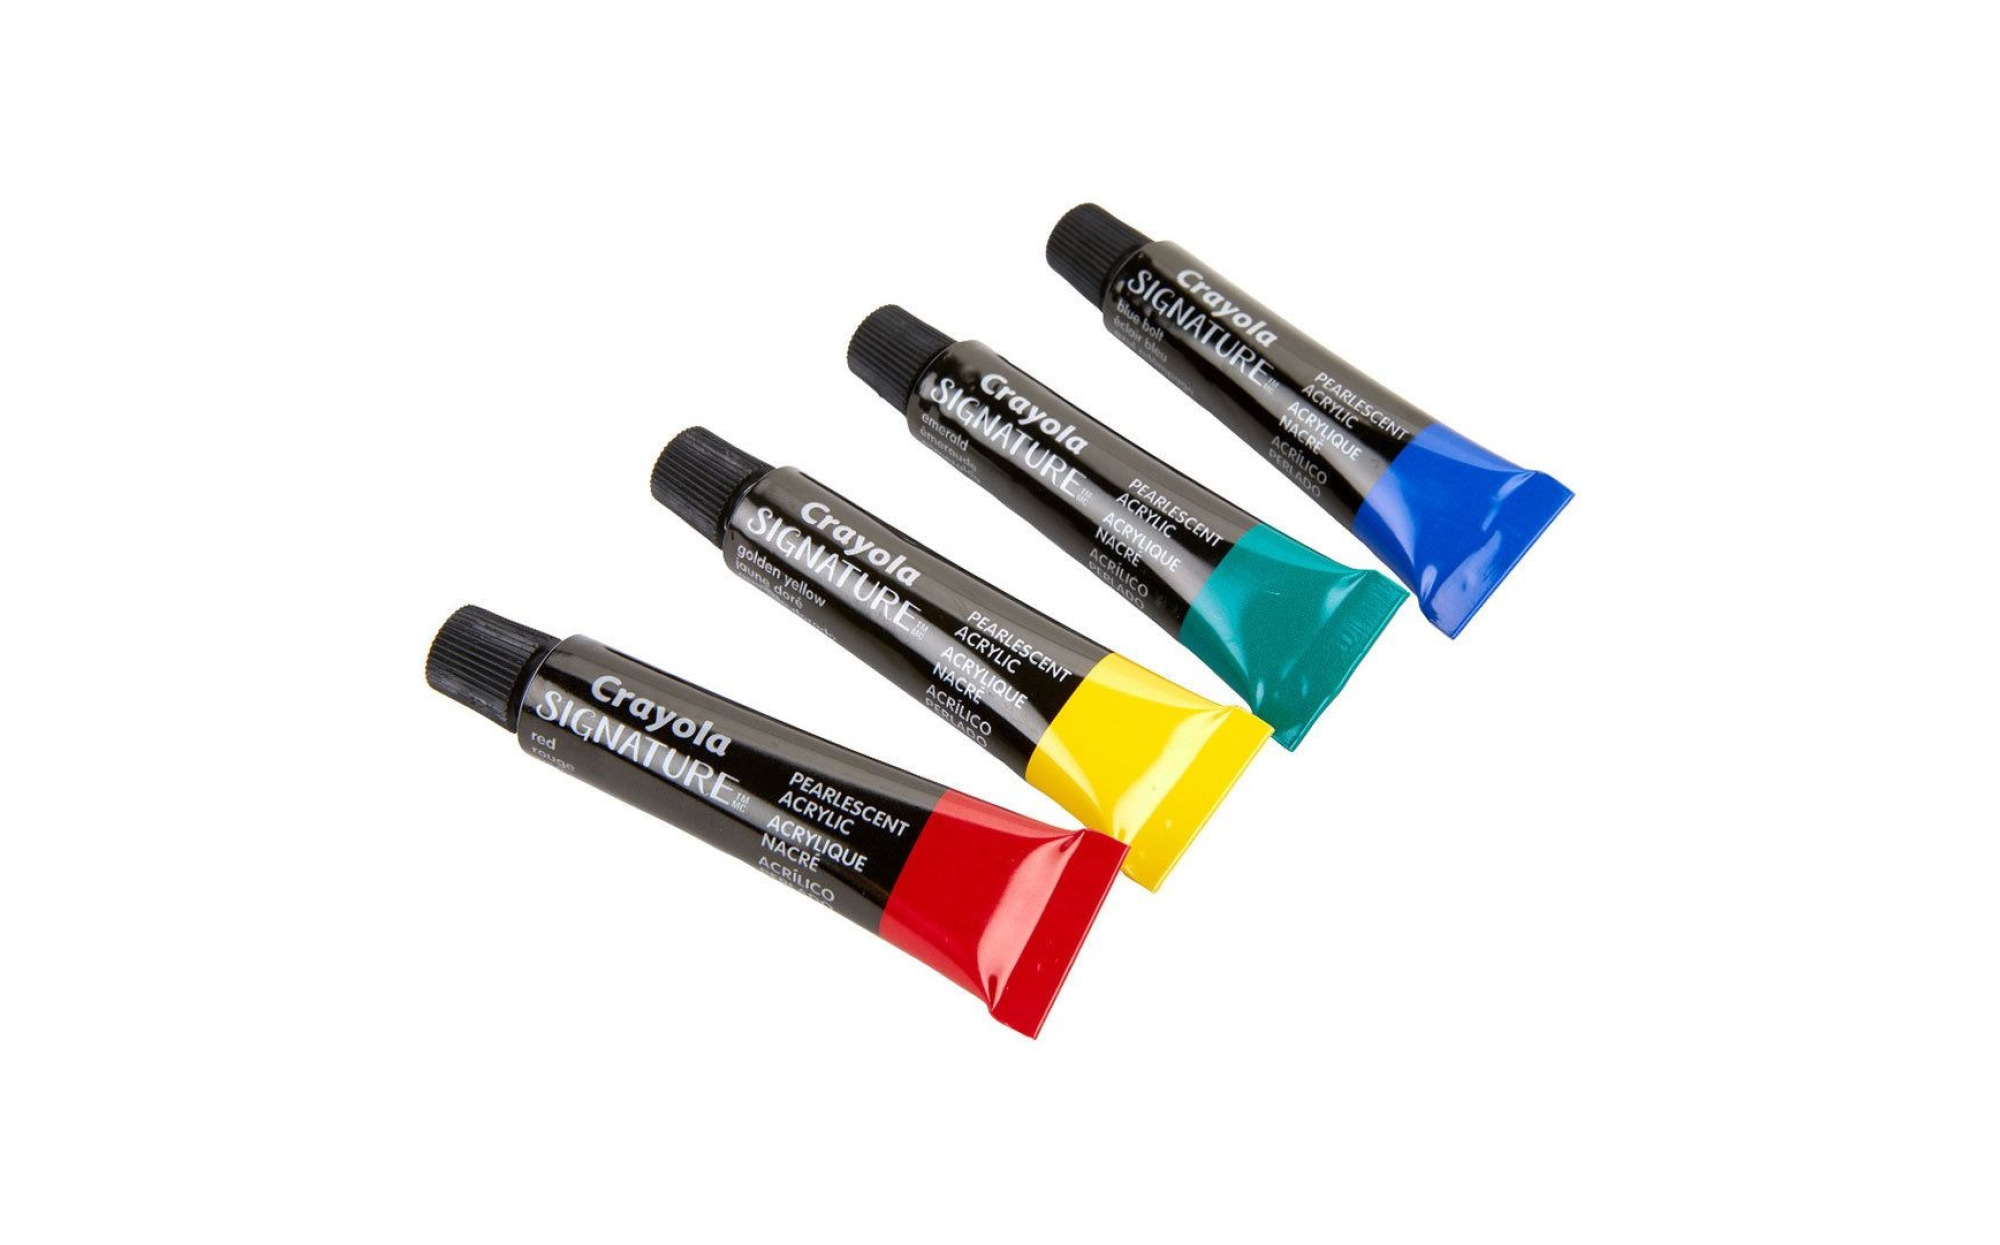 Crayola Signature Premium Watercolor Crayon Sticks & Paintbrush, 12 Count,  Gift